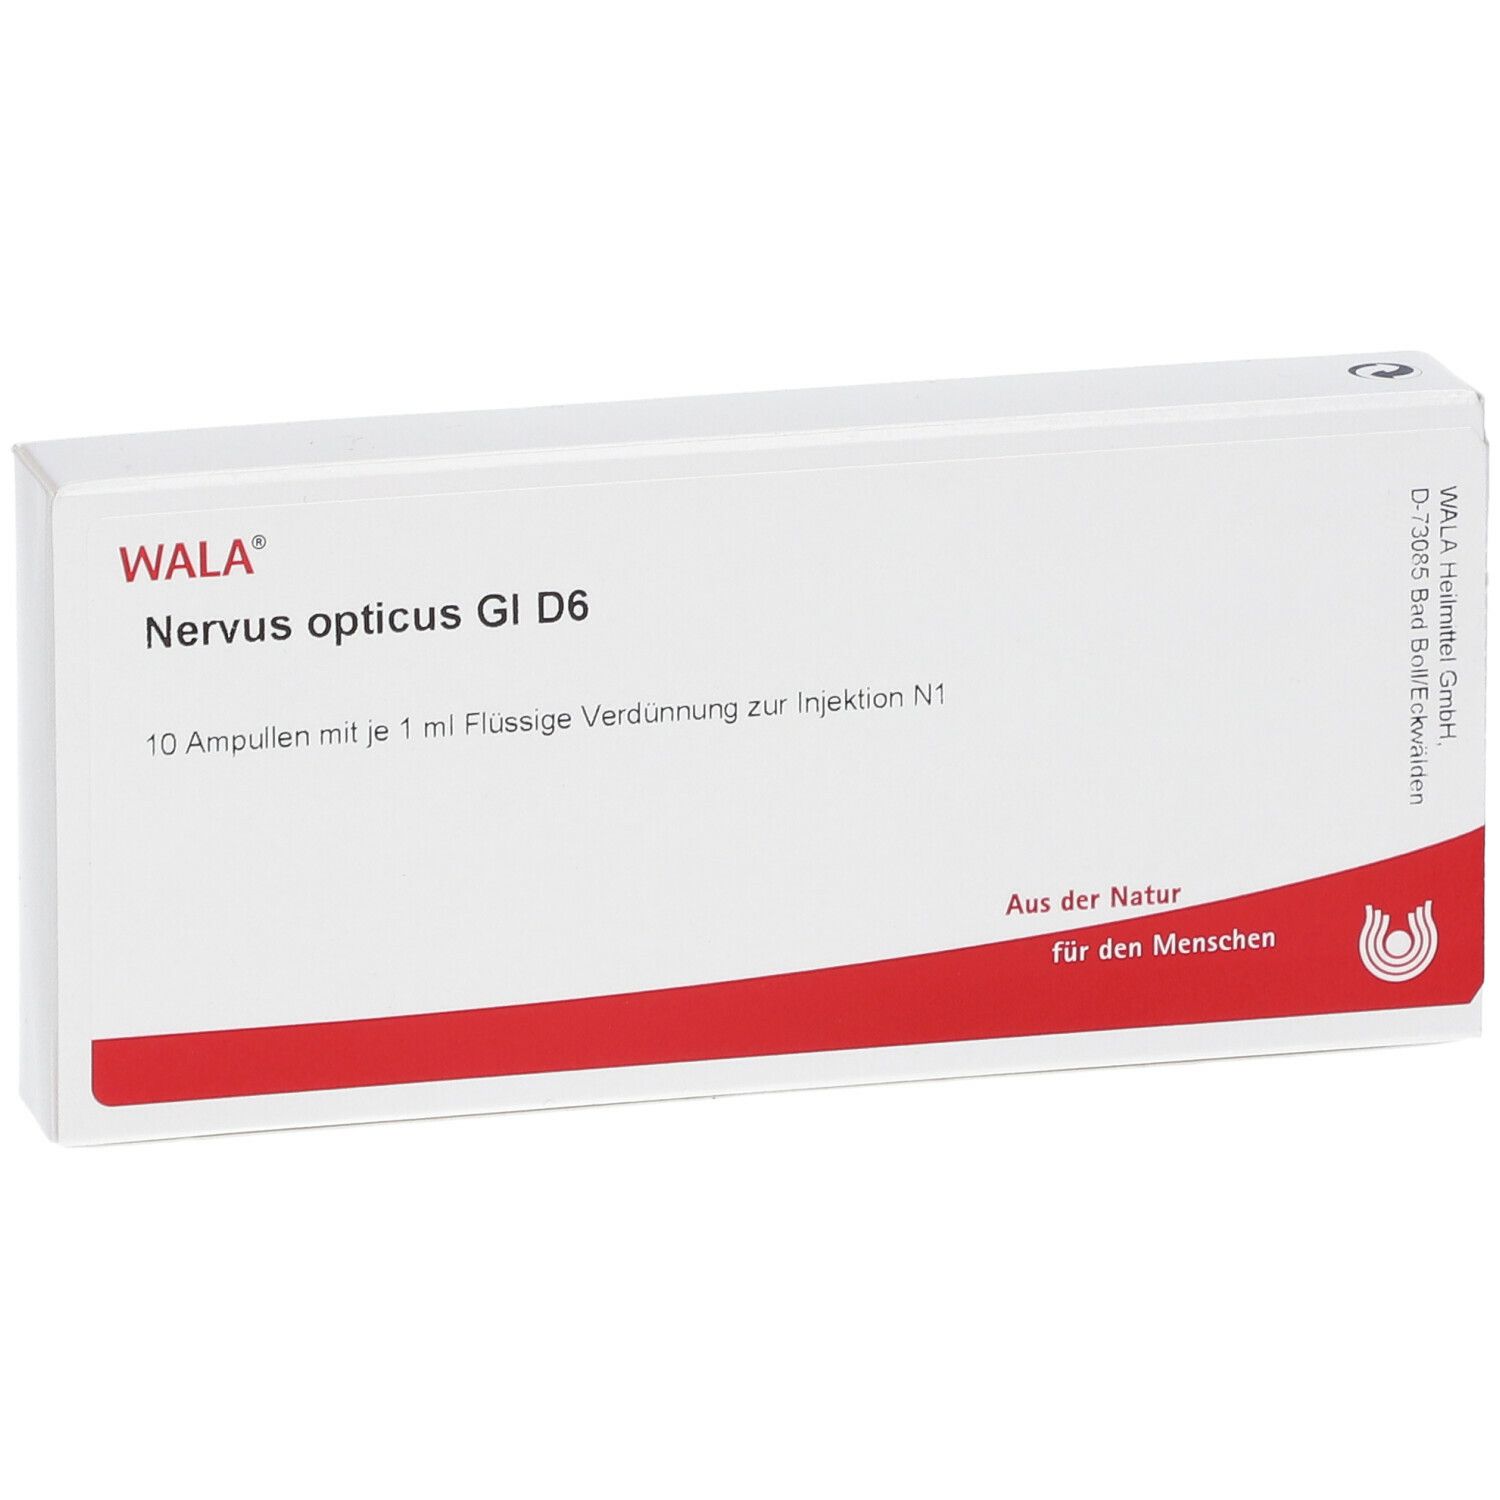 WALA® Nervus opticus Gl D 6